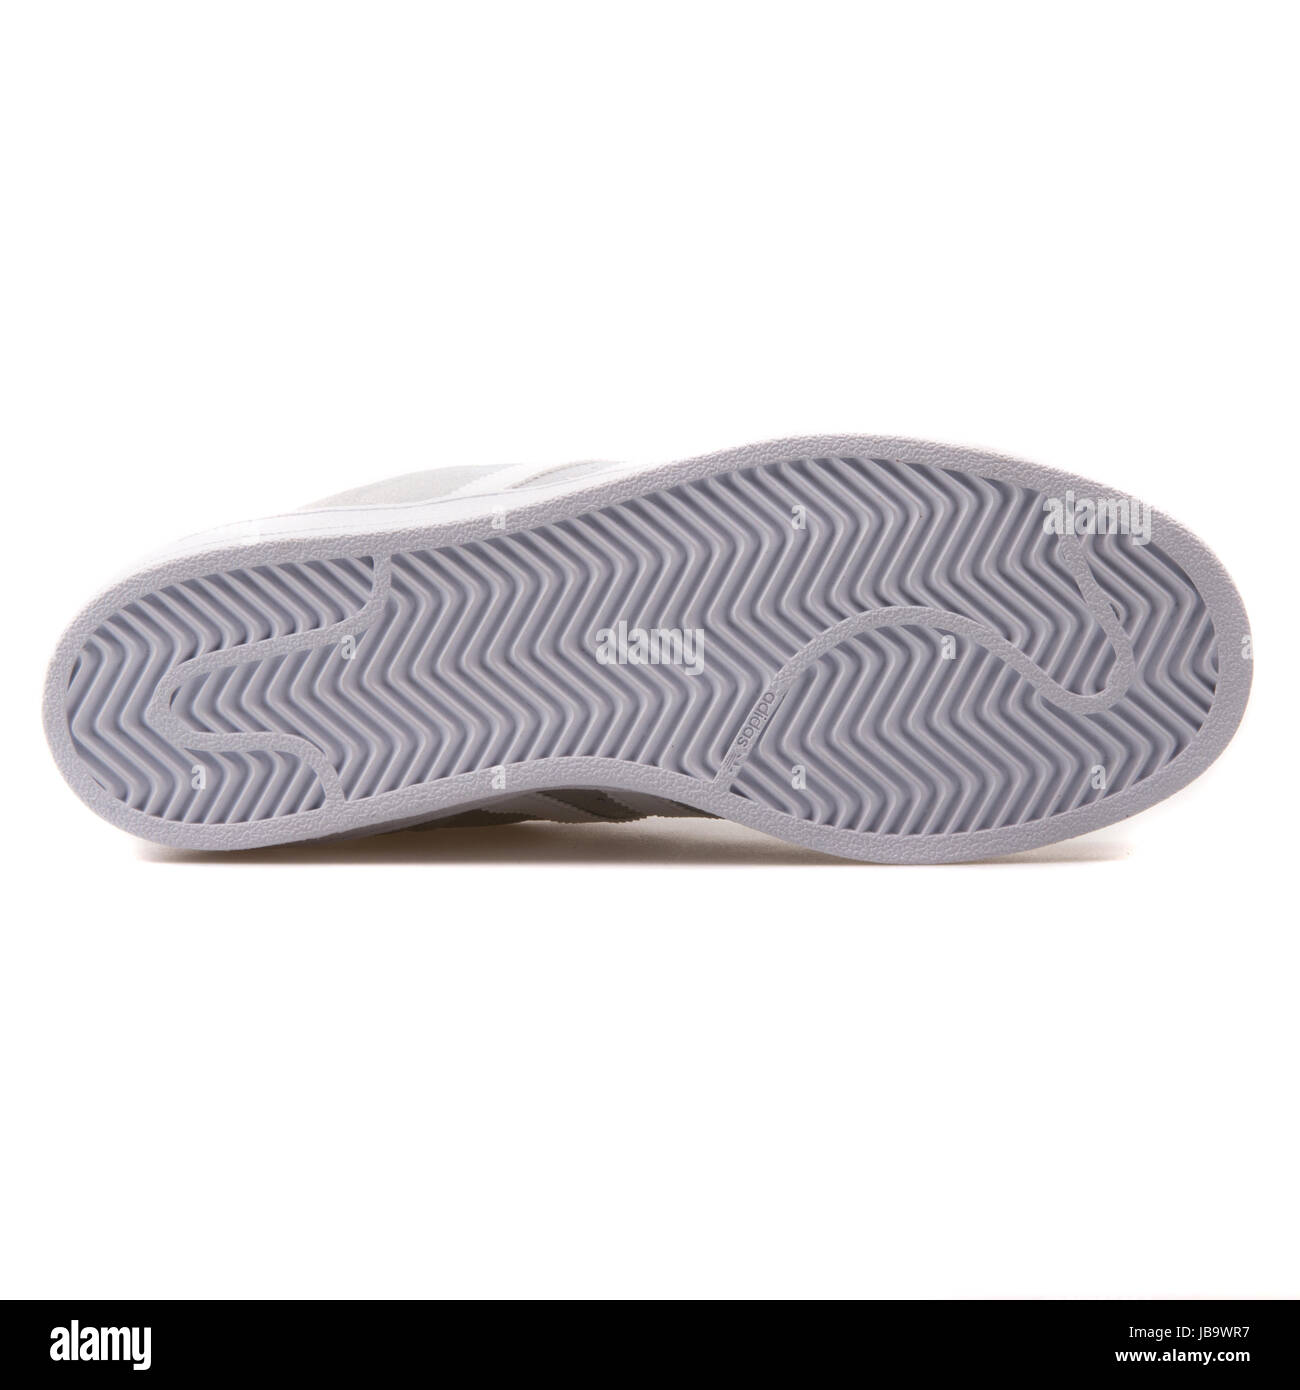 Adidas Superstar W ologramma cangiante scarpe donna - S81644 Foto stock -  Alamy